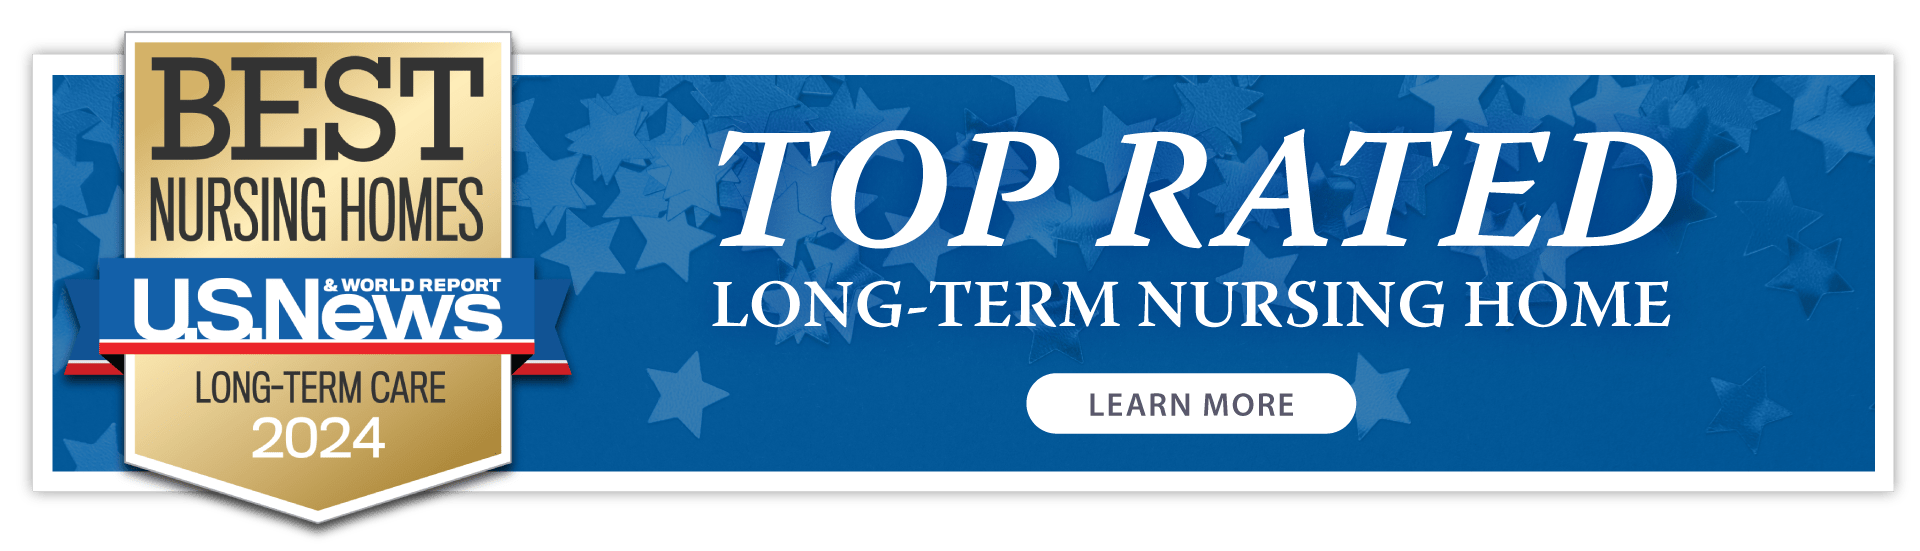 US NEWS Report Best Nursing Homes Long Term Care 2024